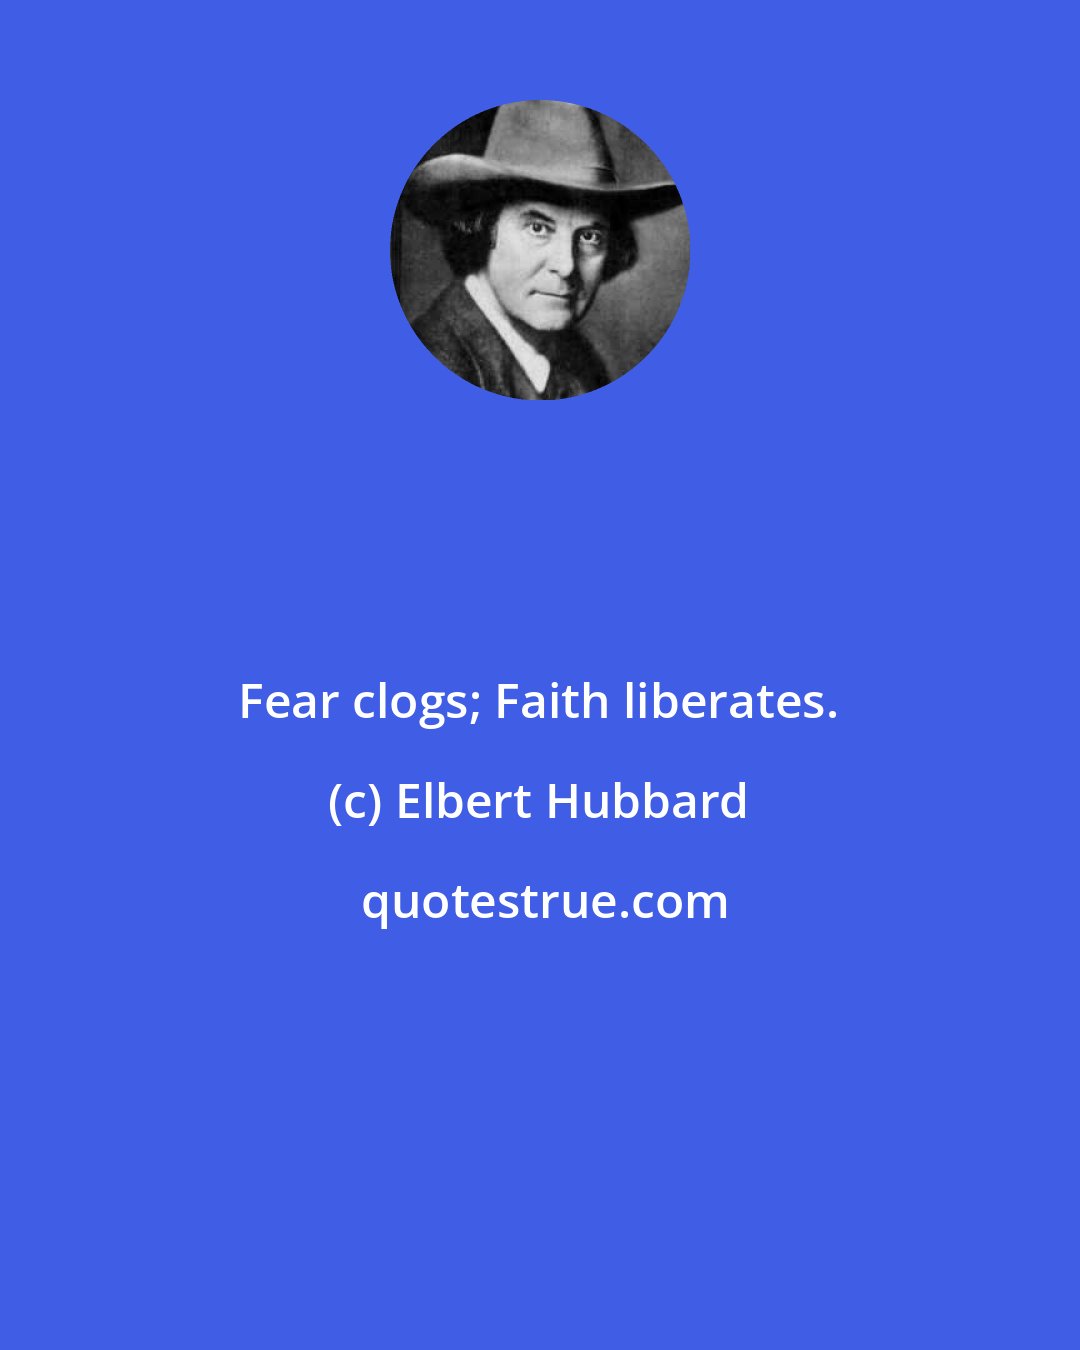 Elbert Hubbard: Fear clogs; Faith liberates.